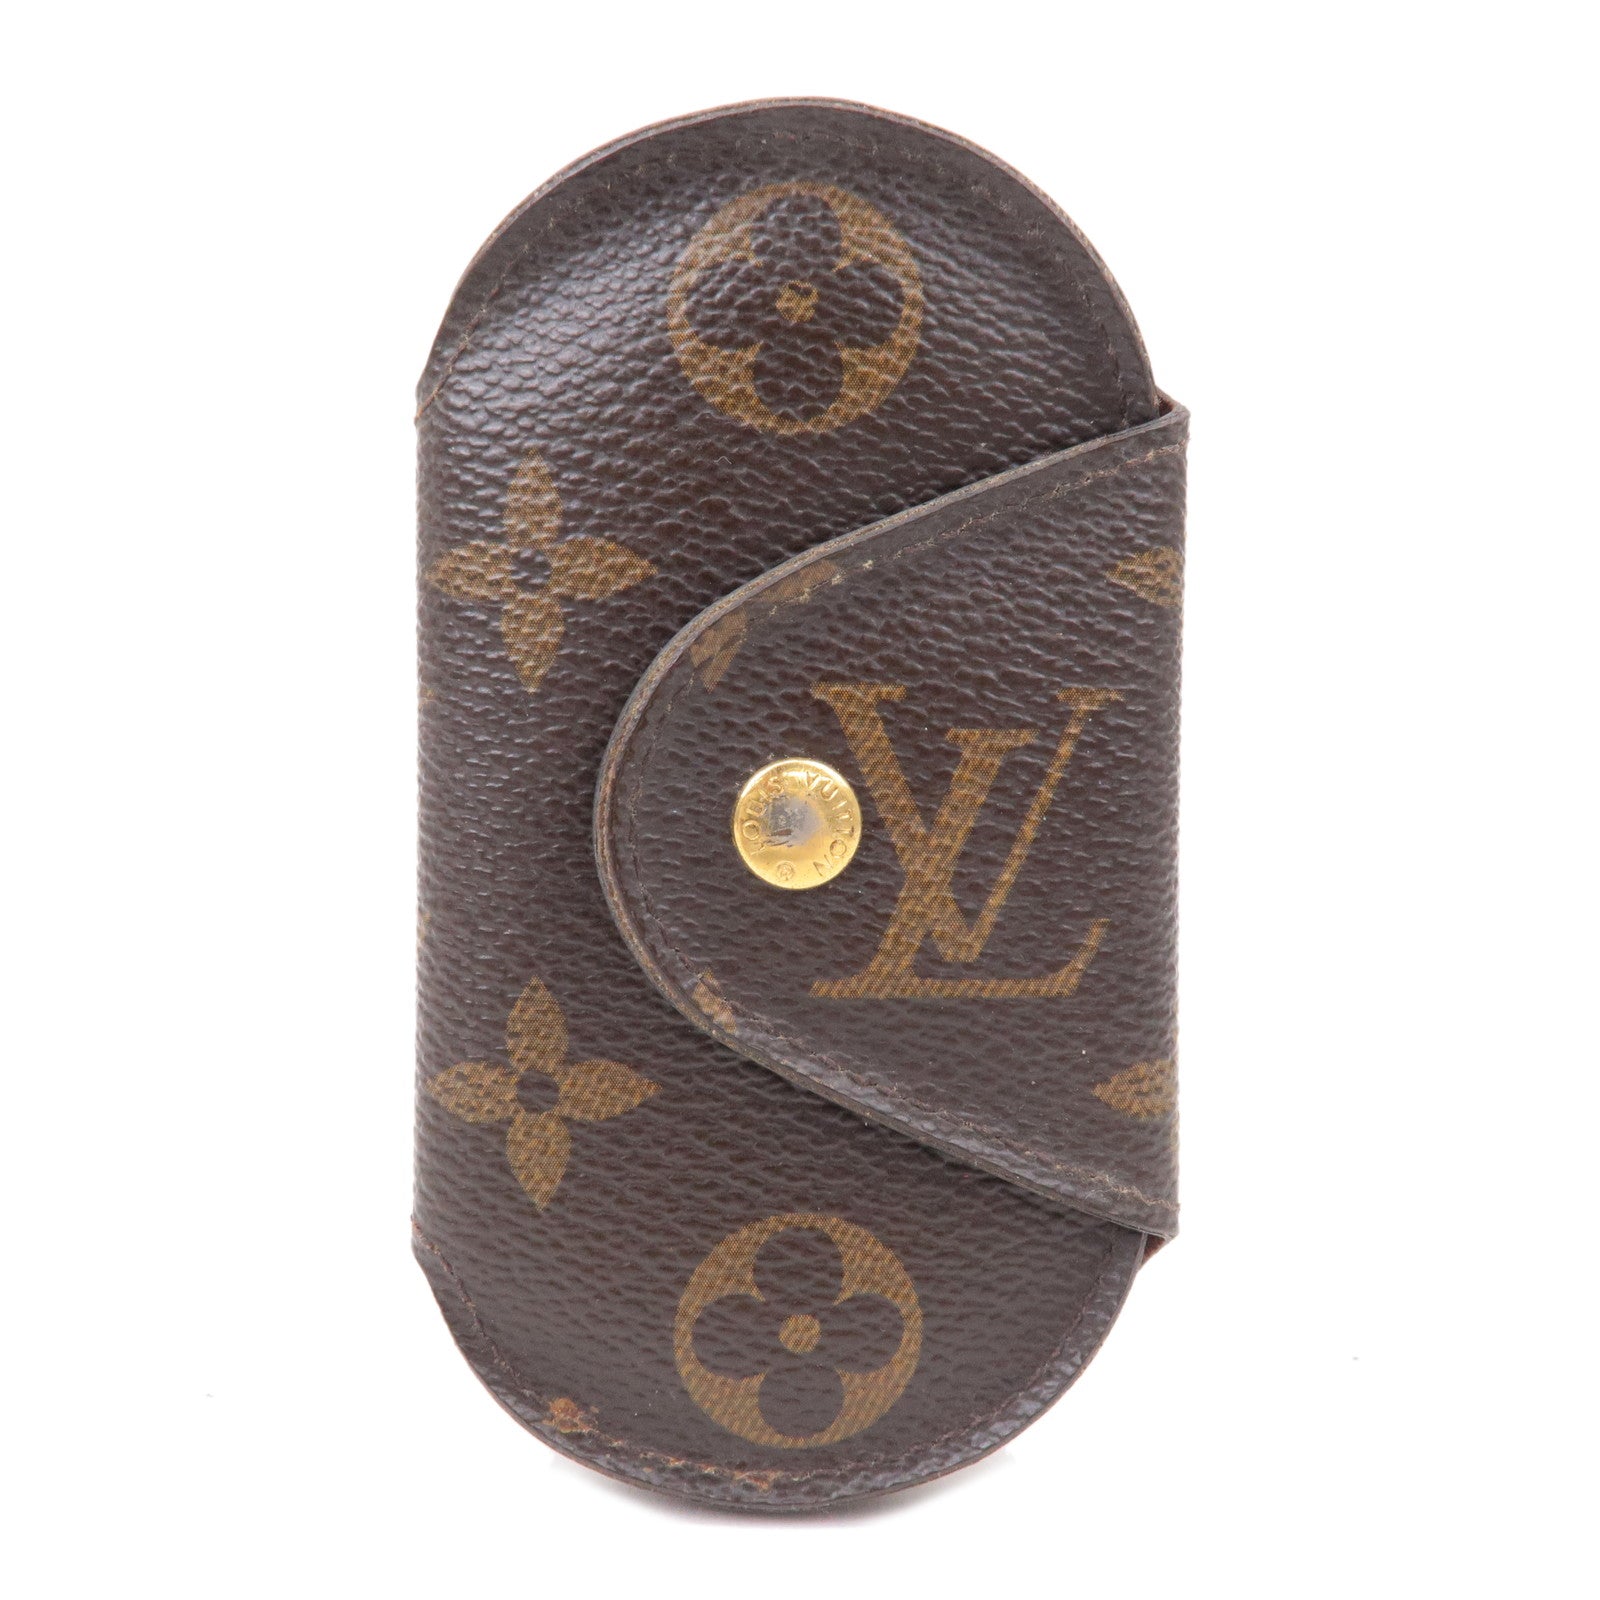 100% Authentic Louis Vuitton Black Monogram Phone Case Holder Made